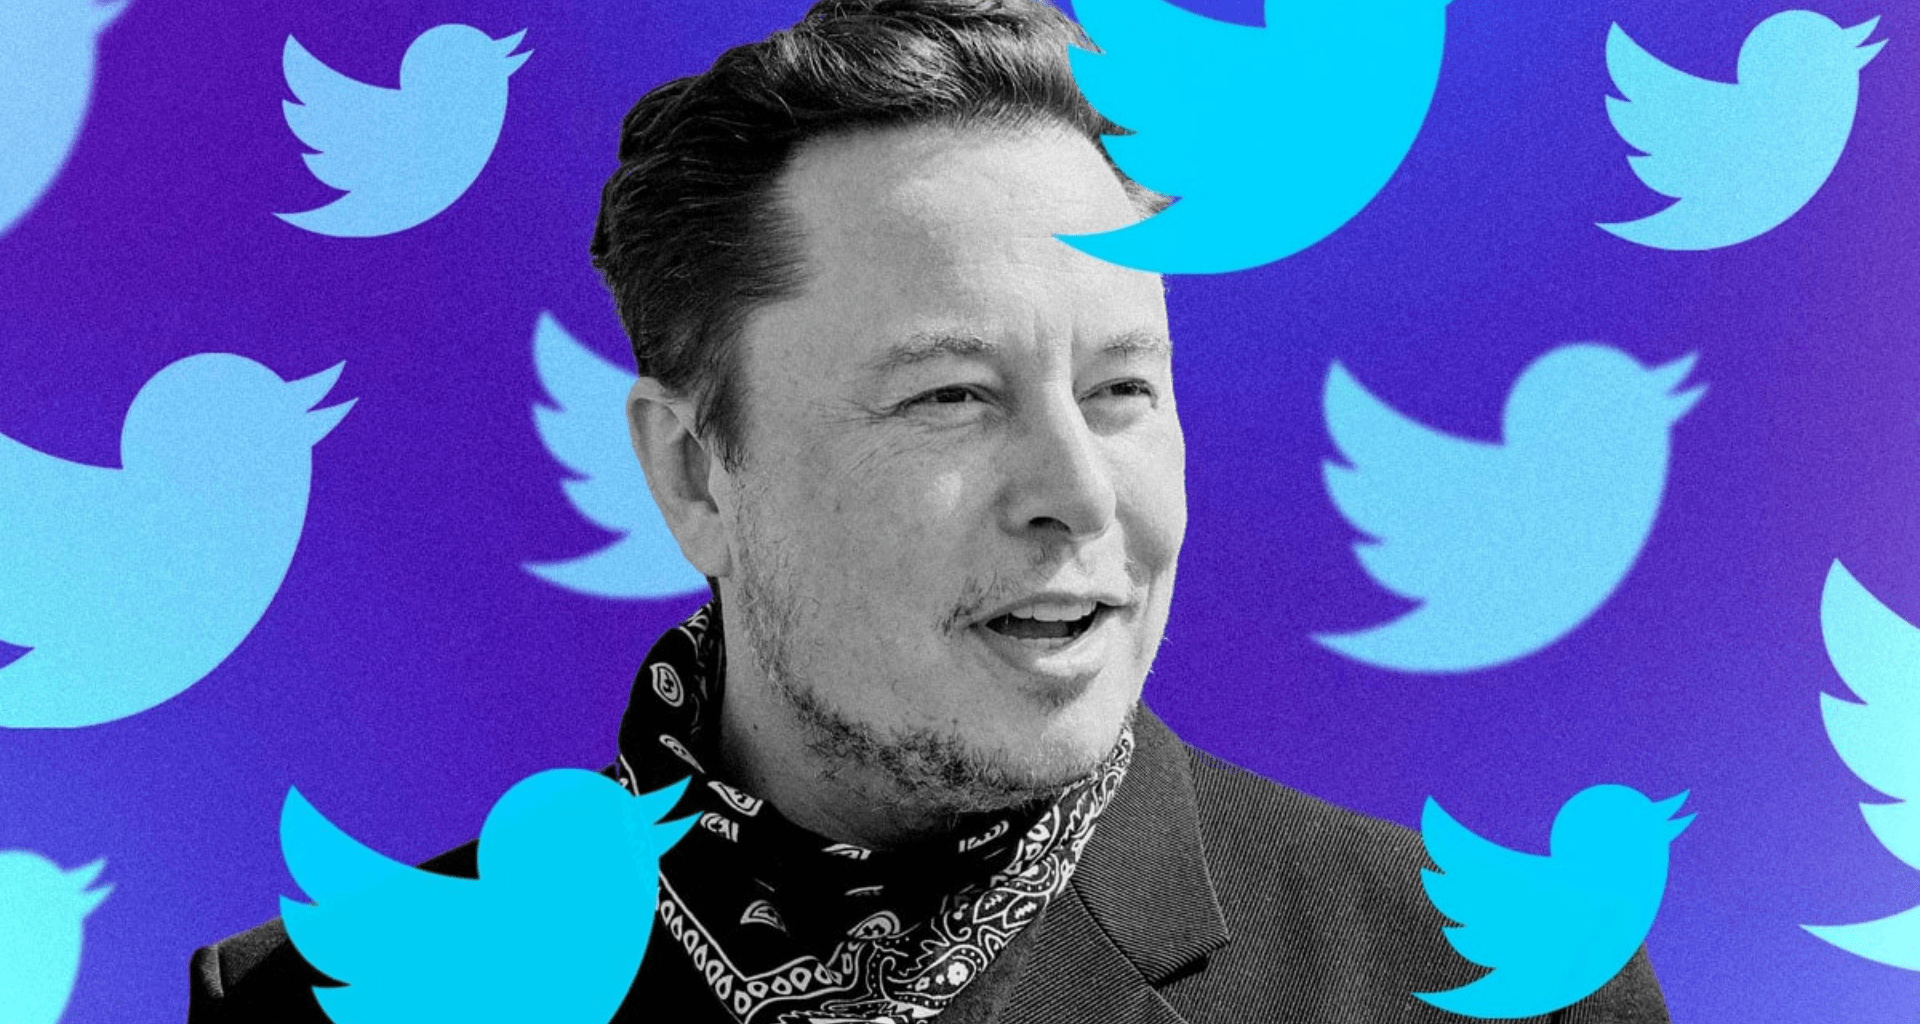 Elon musk na compra do twitter